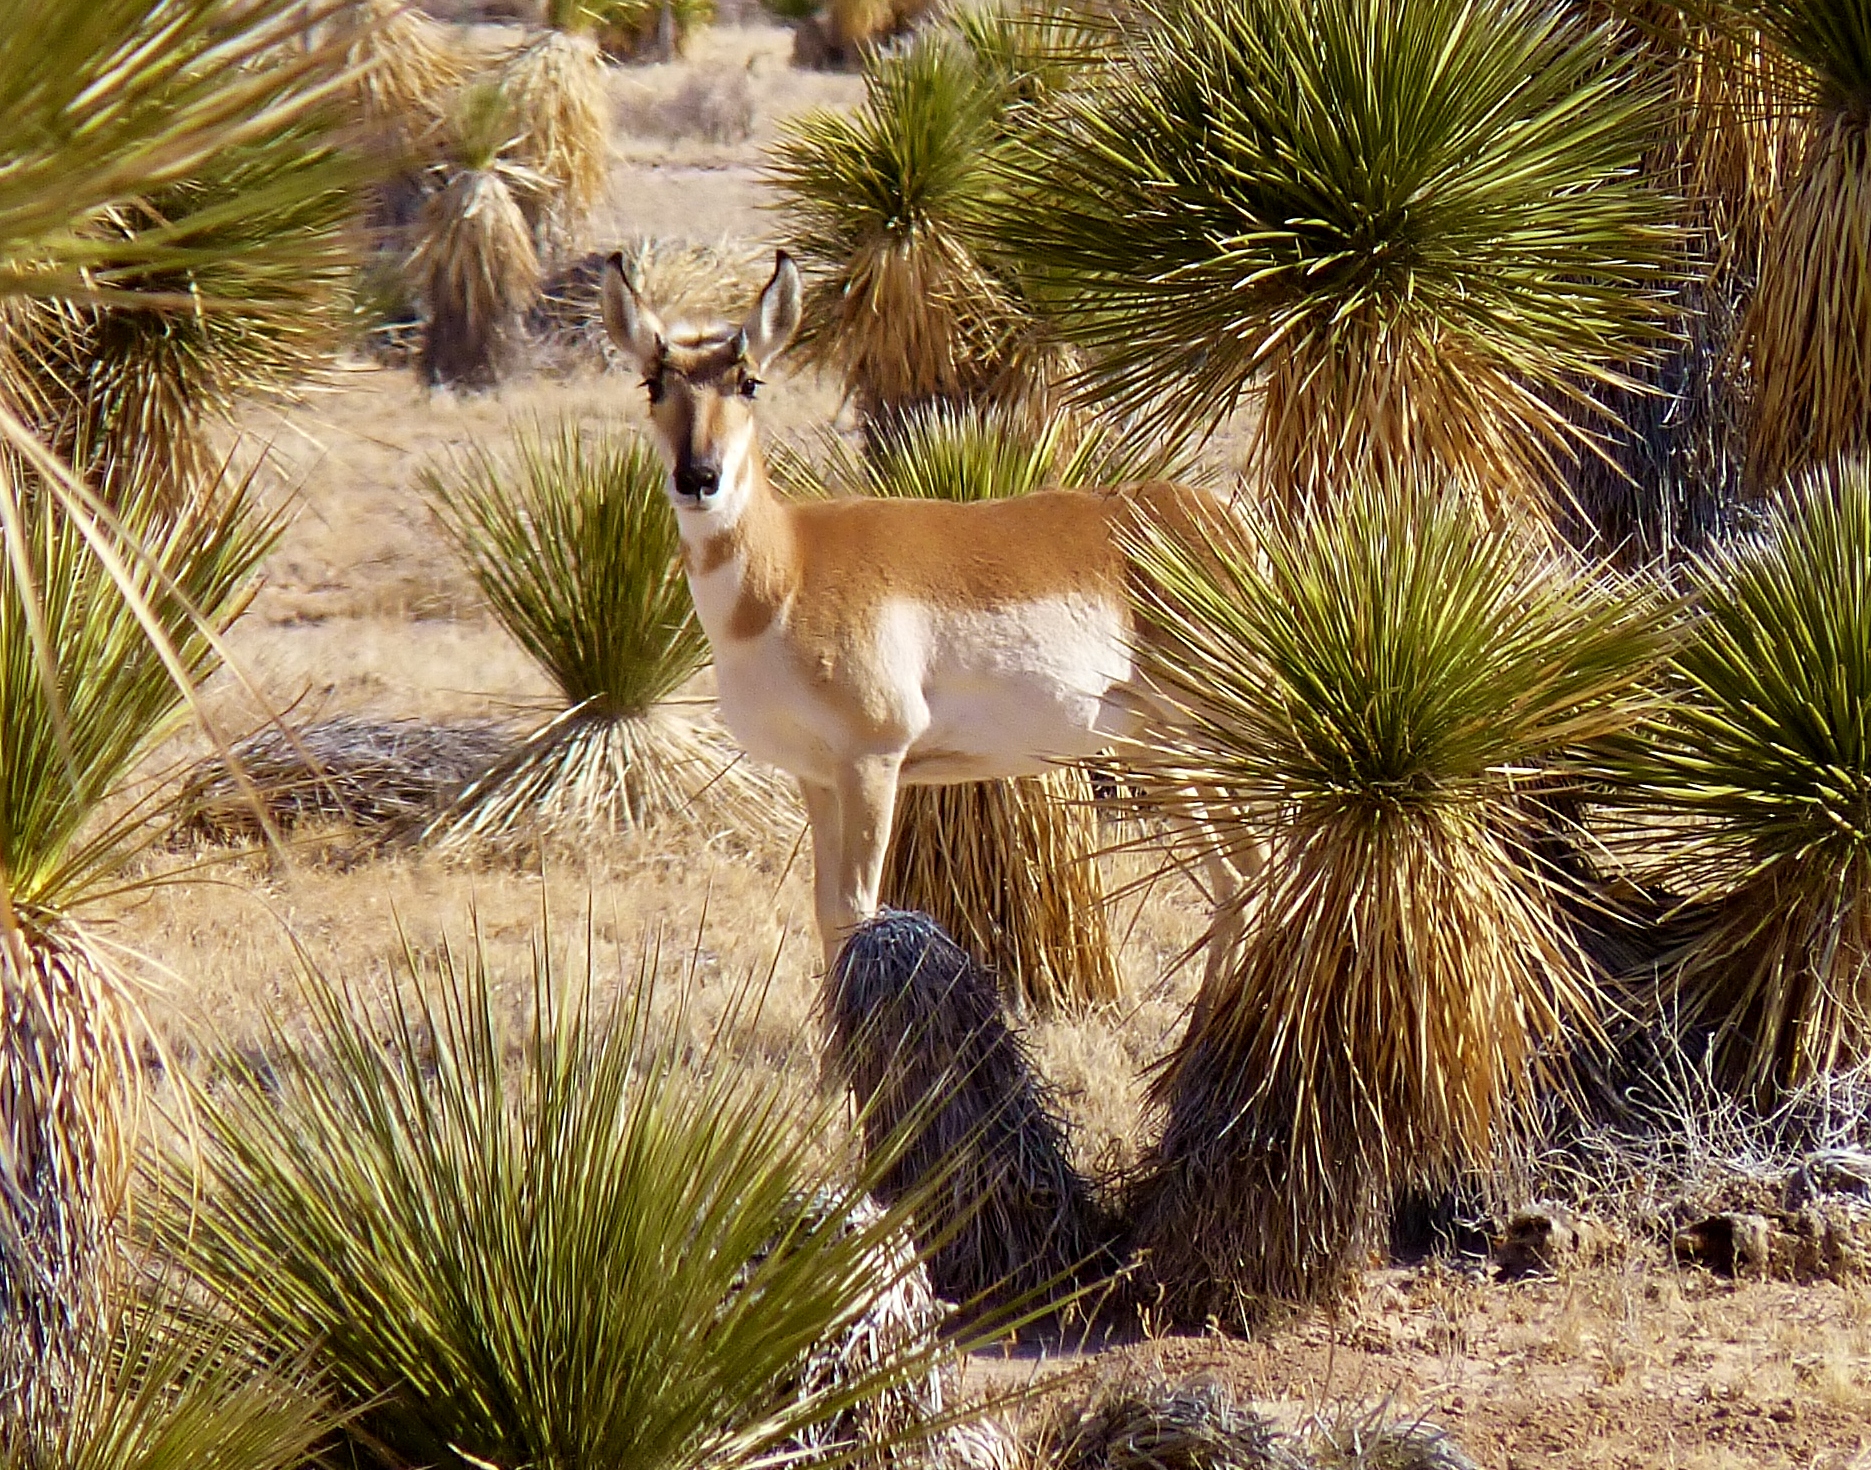 An antelope in Otero Mesa. Image credit: Lisa Phillips / BLM